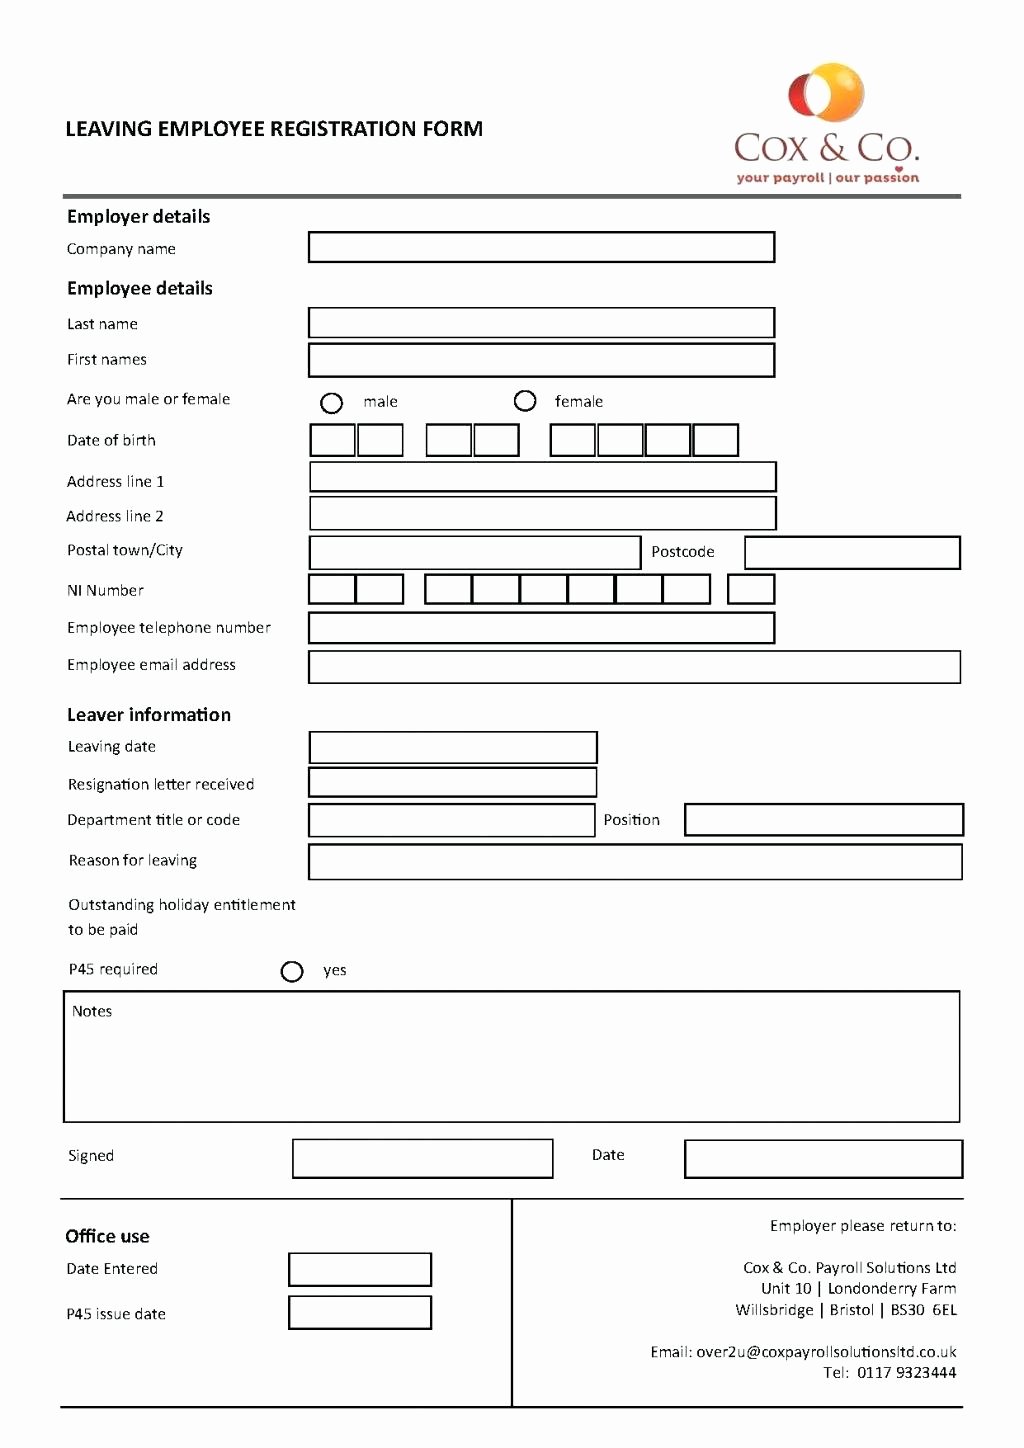 New Hire Paperwork Checklist Template Beautiful 99 New Hire form Template 12 New Hire Processing forms